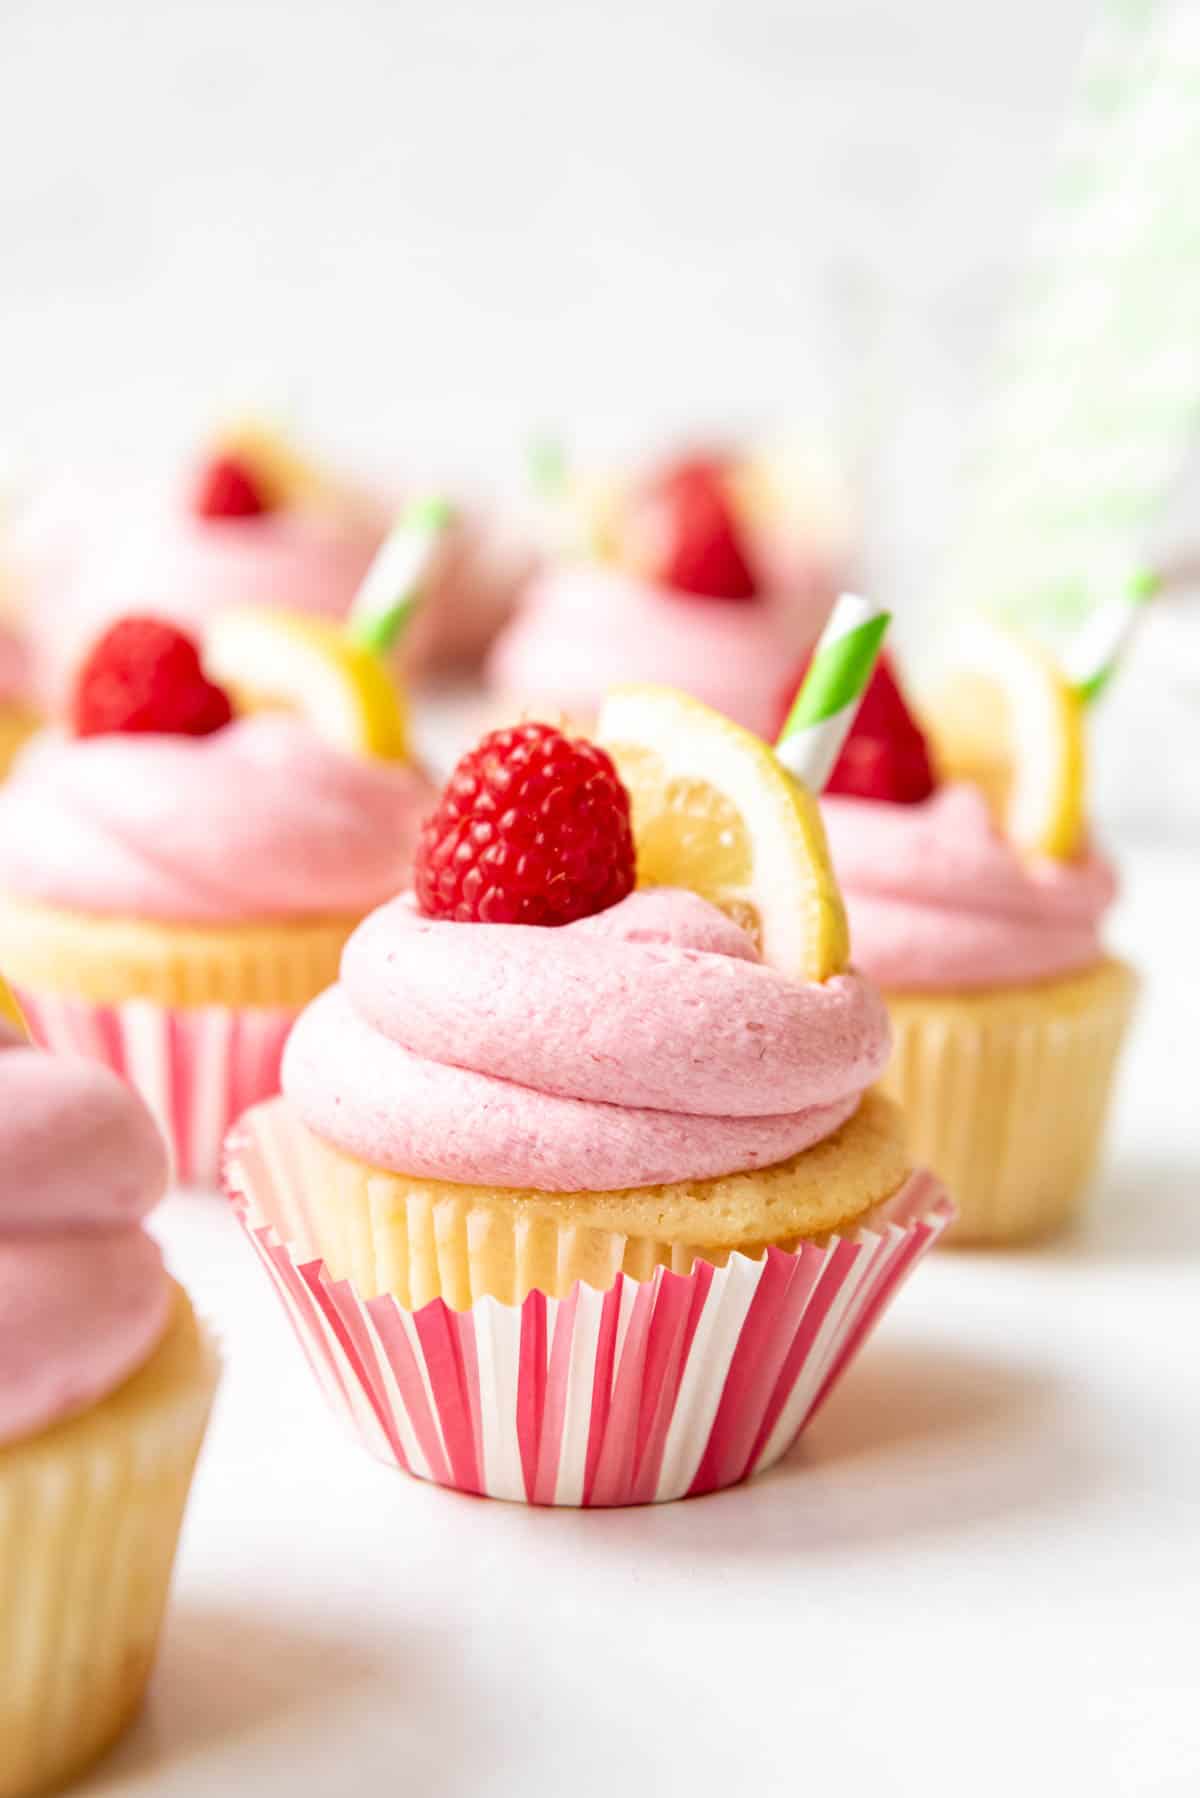 Raspberry lemonade cupcakes decorated with fresh raspberries, lemon slices, and straws.